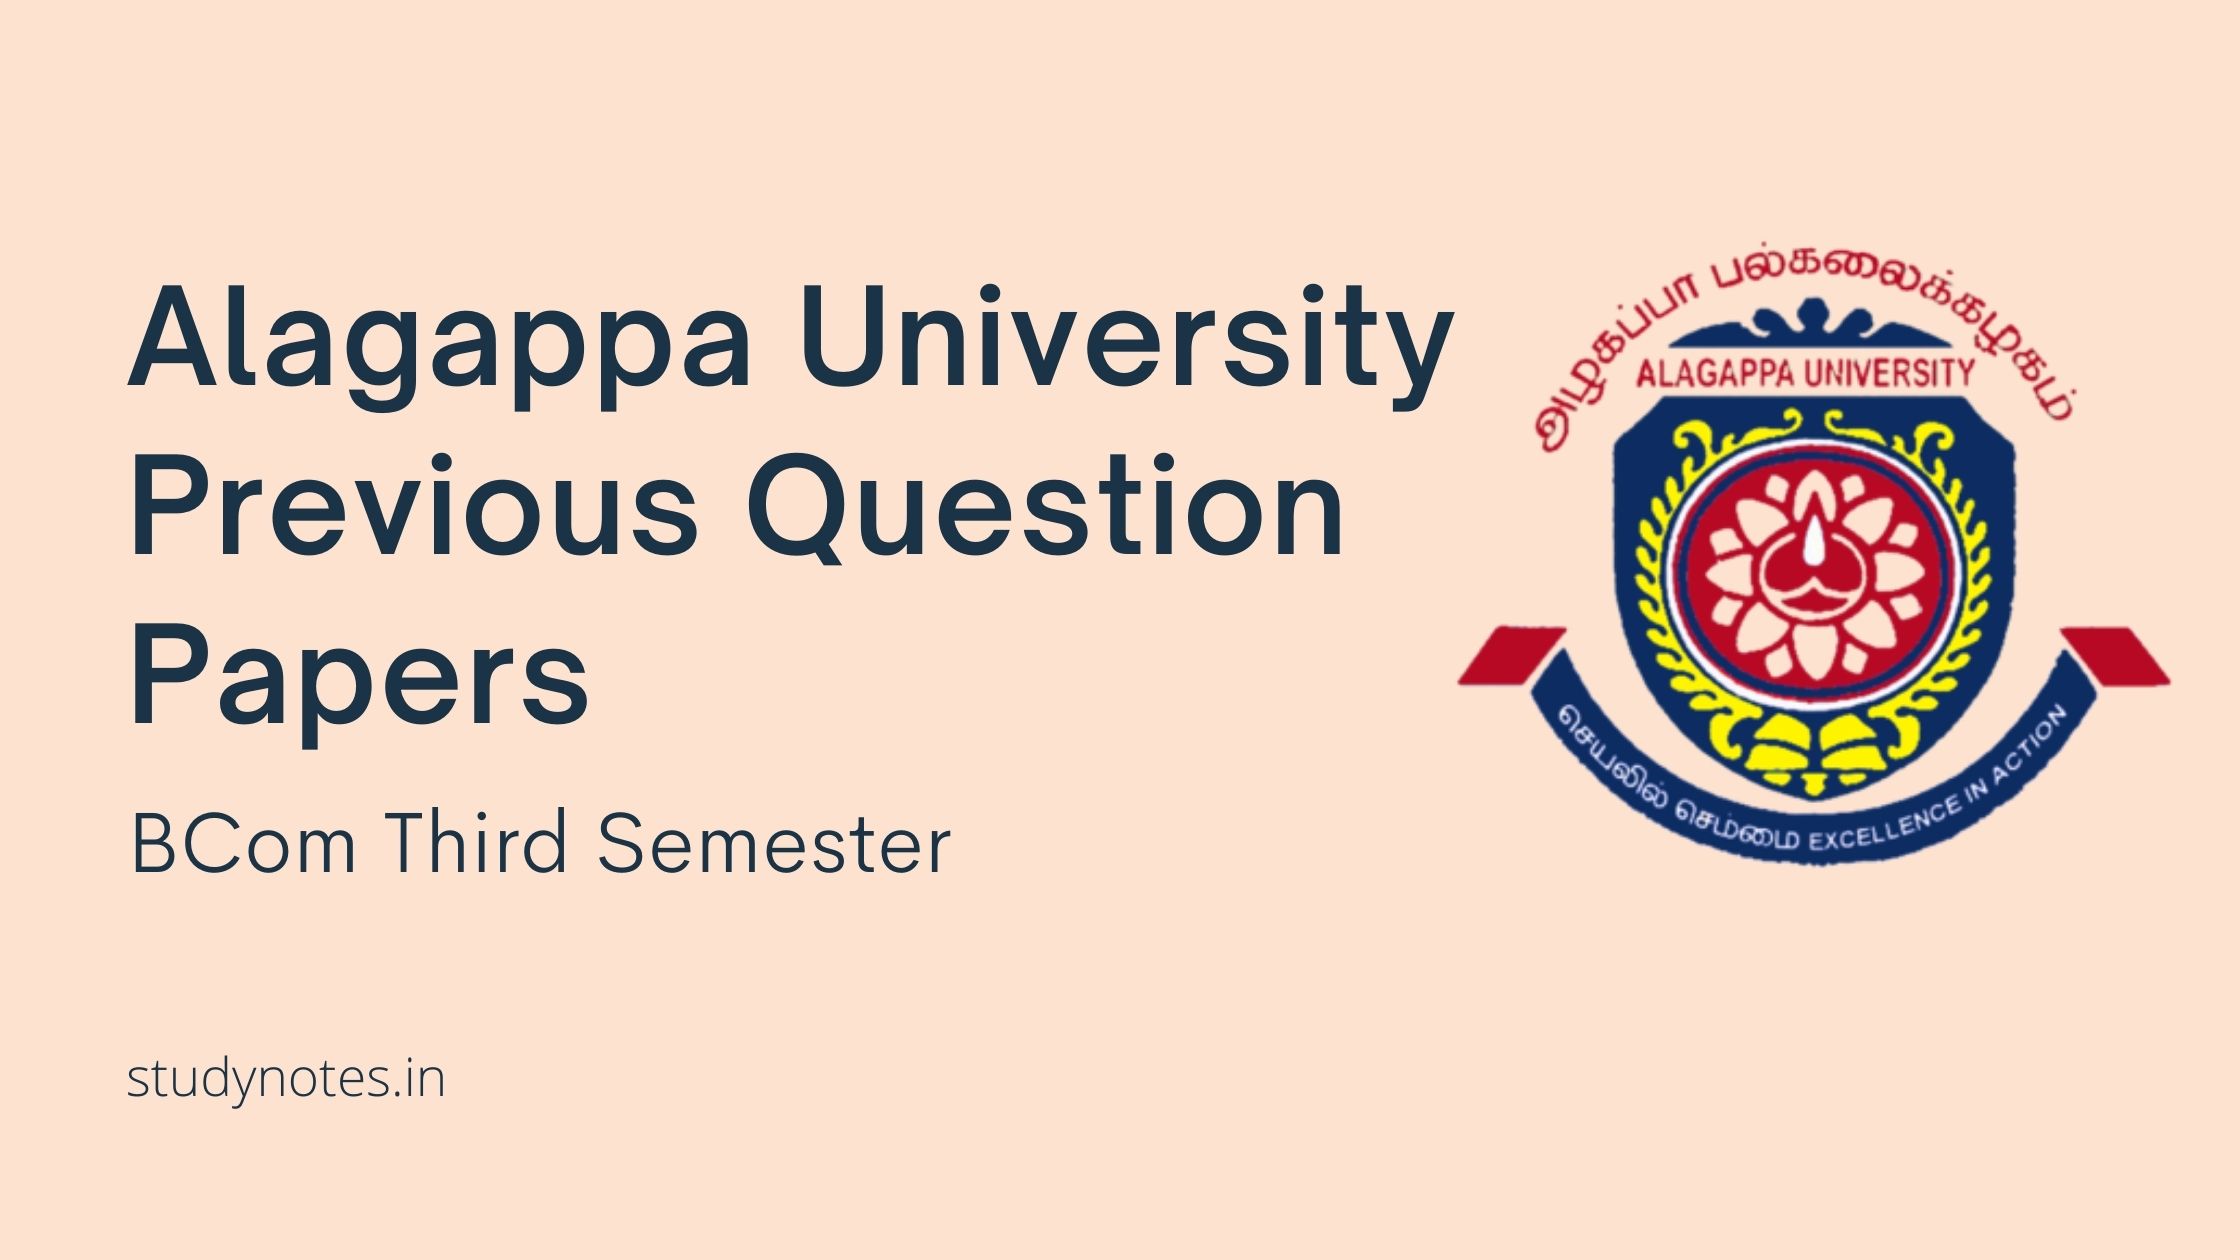 Alagappa University BCom Third Semester Previous Question Paper